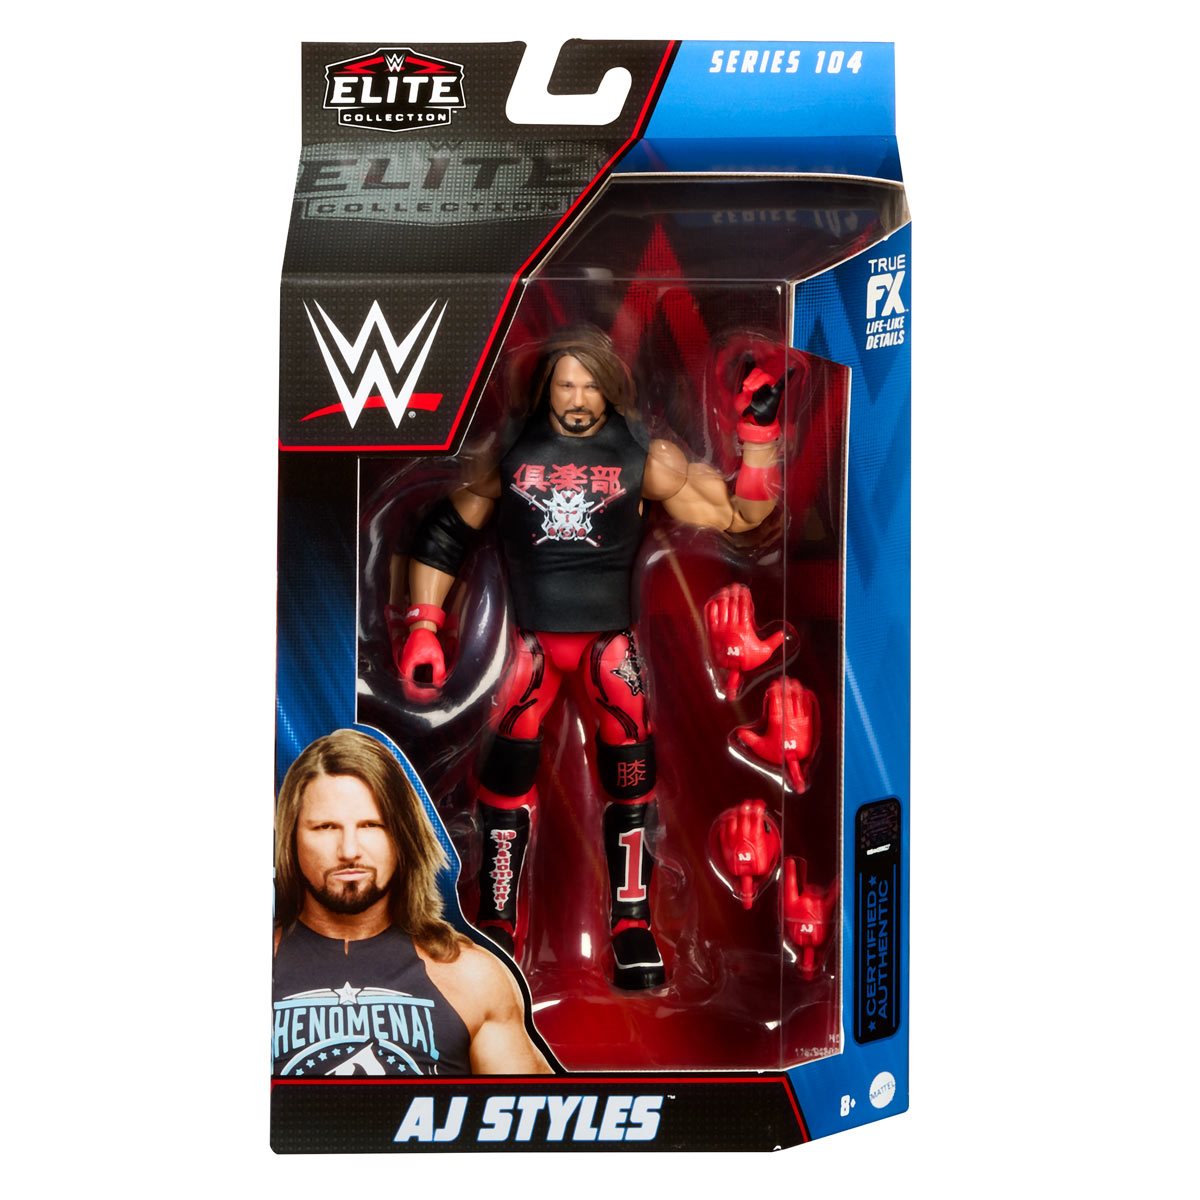 WWE Elite Collection Series 104: AJ Styles